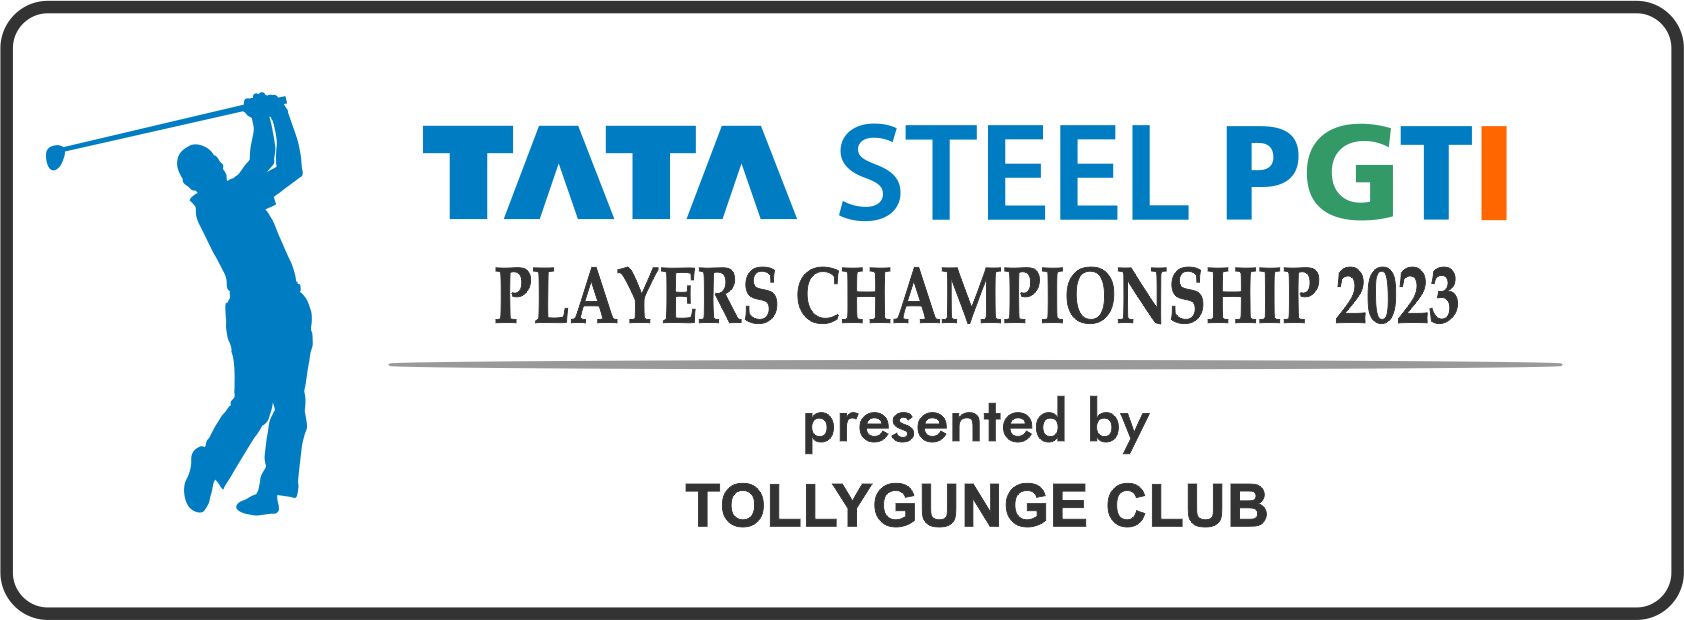 Tata Steel renews PGTI partnership - India Golf Weekly